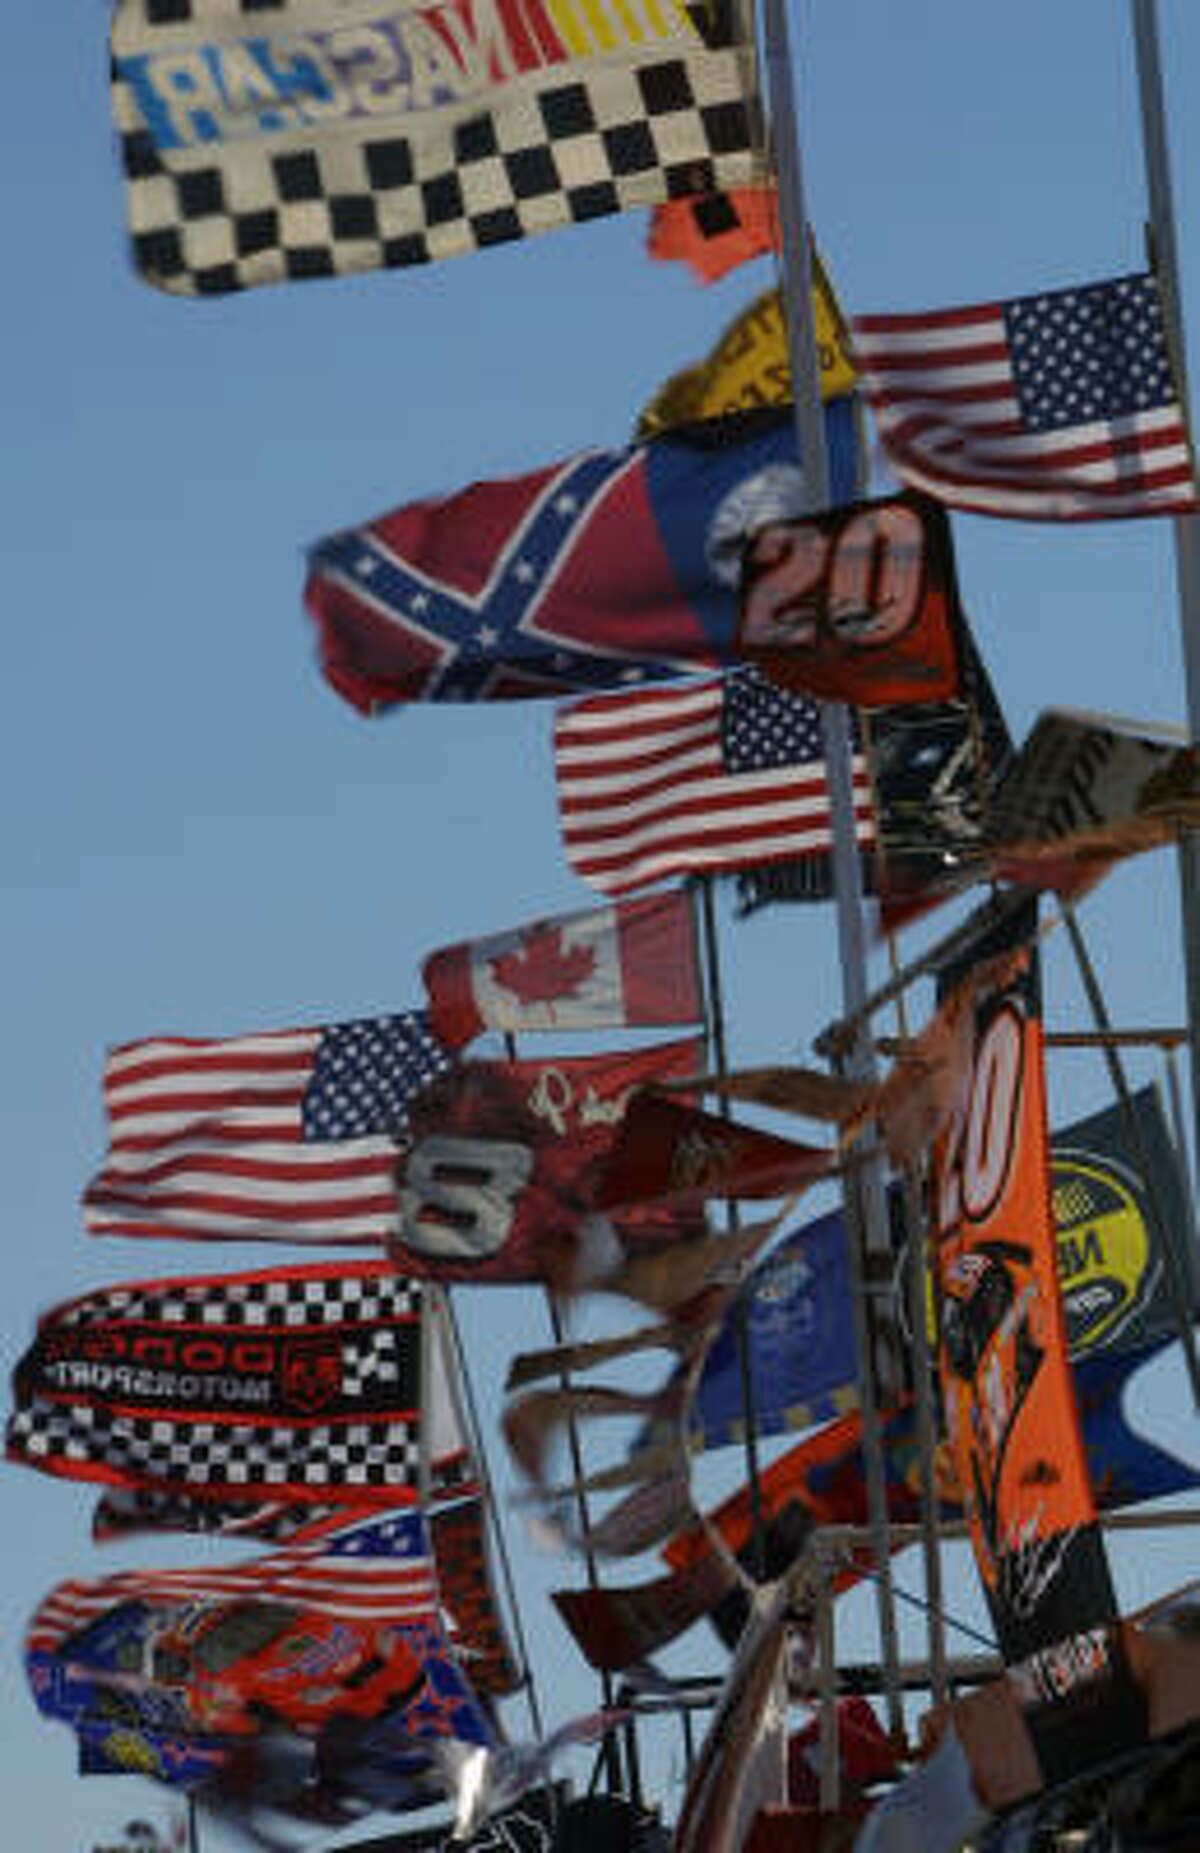 Auto Racing fans flags fly at Daytona International Speedway in Daytona Beach, Fla., before Sunday's Daytona 500.